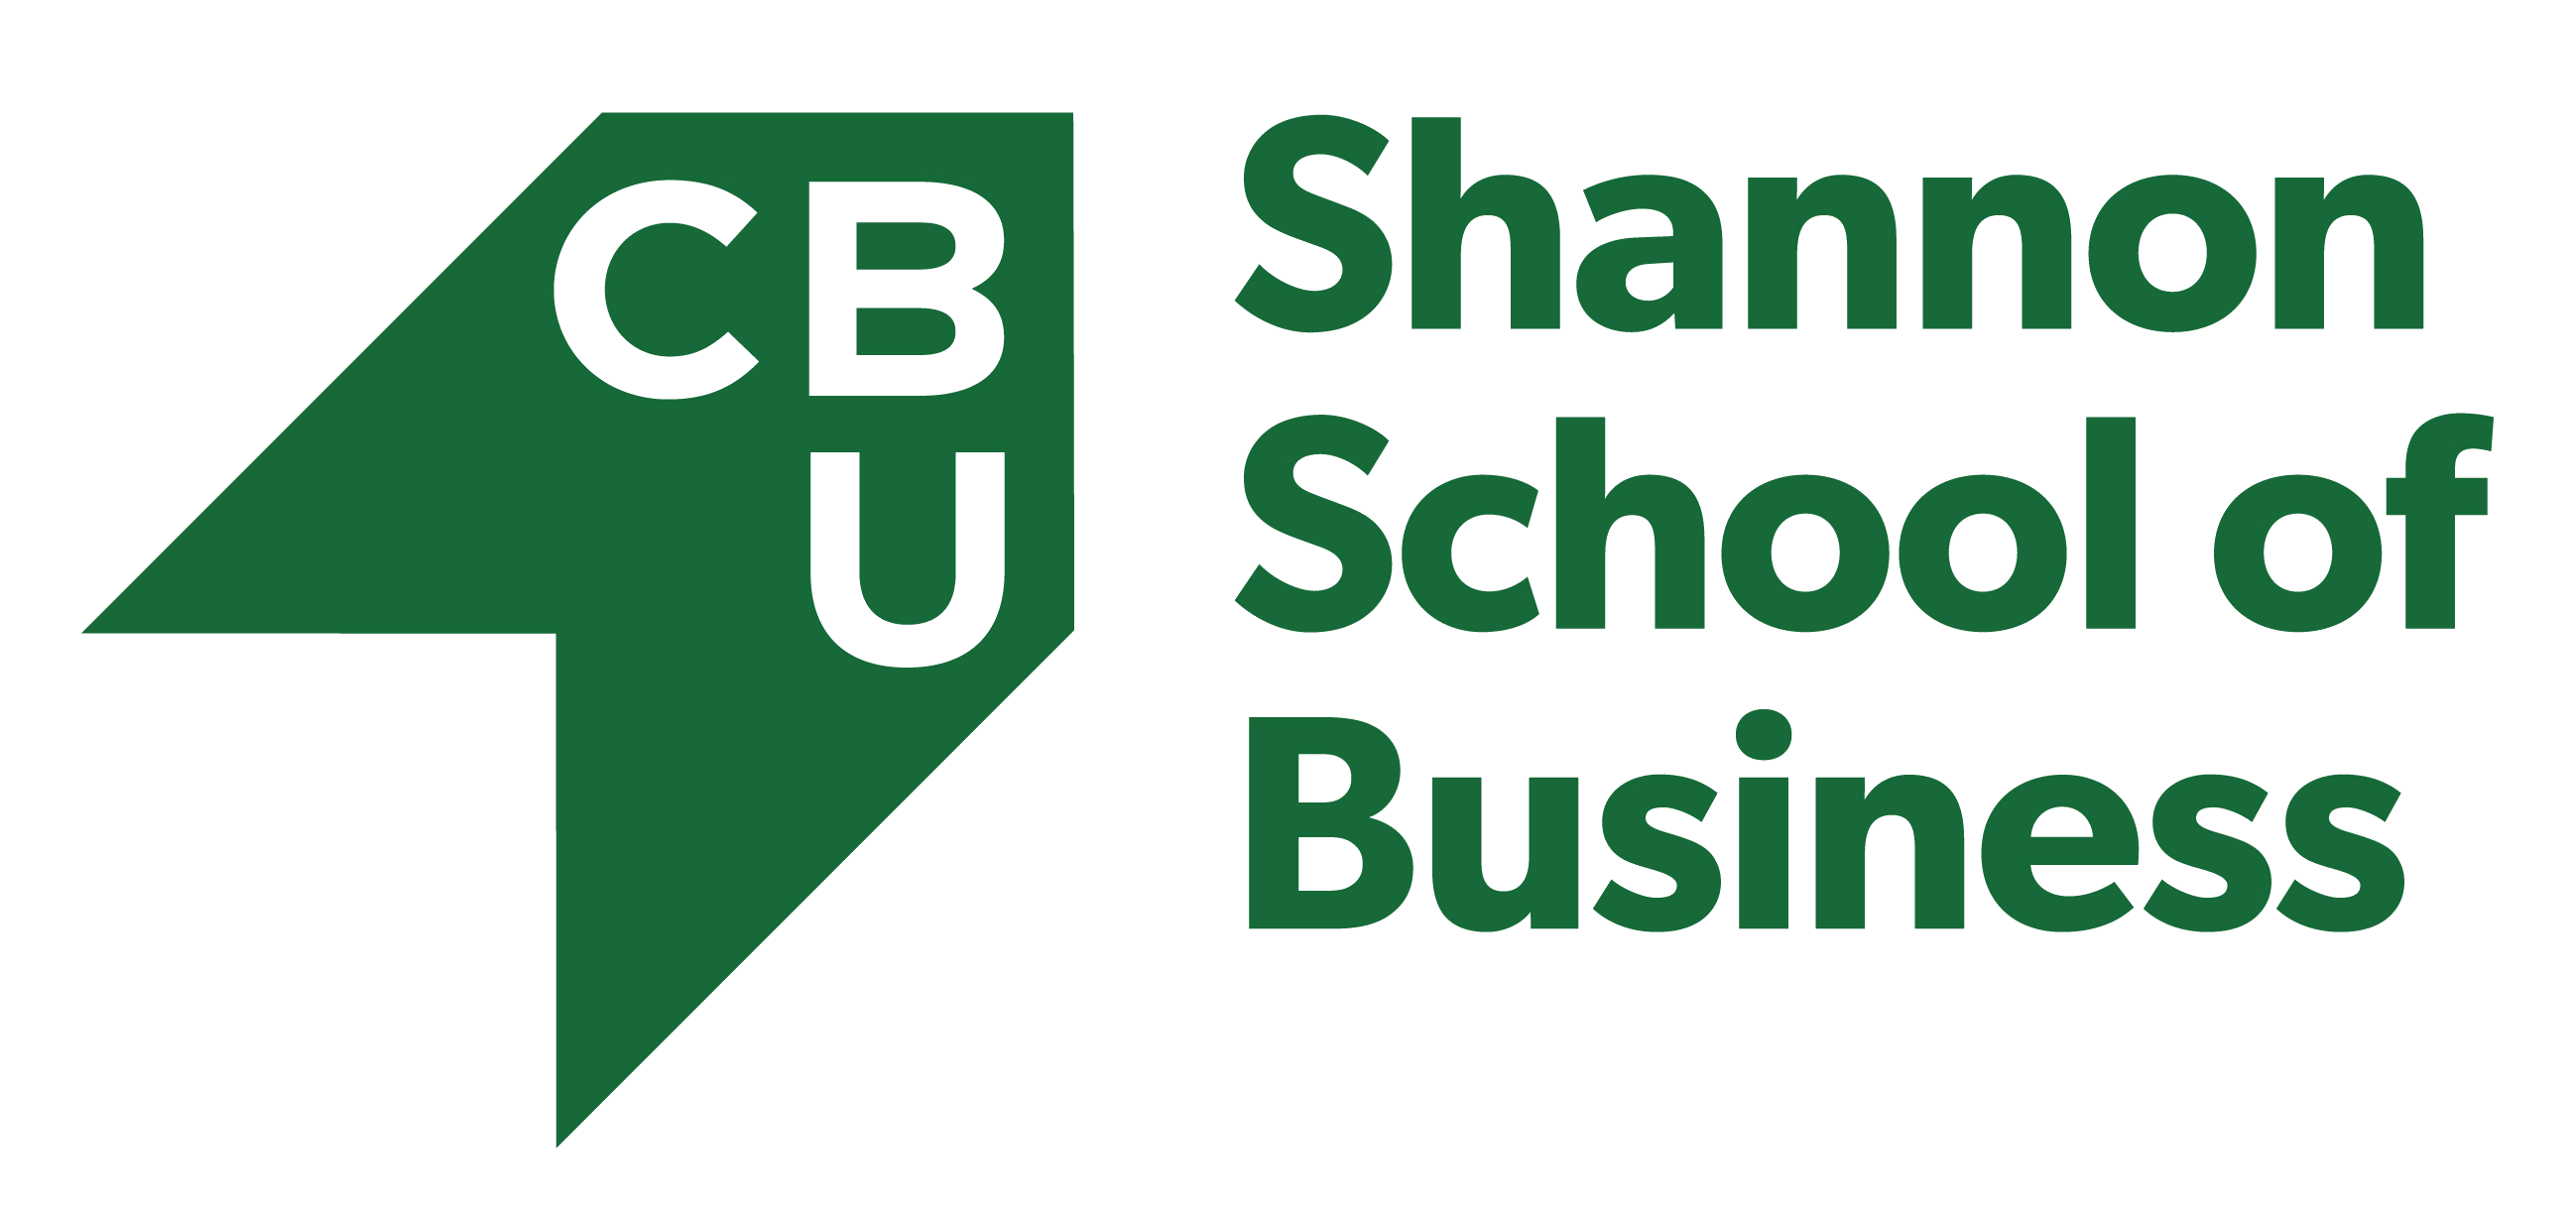 Shannon School of Business